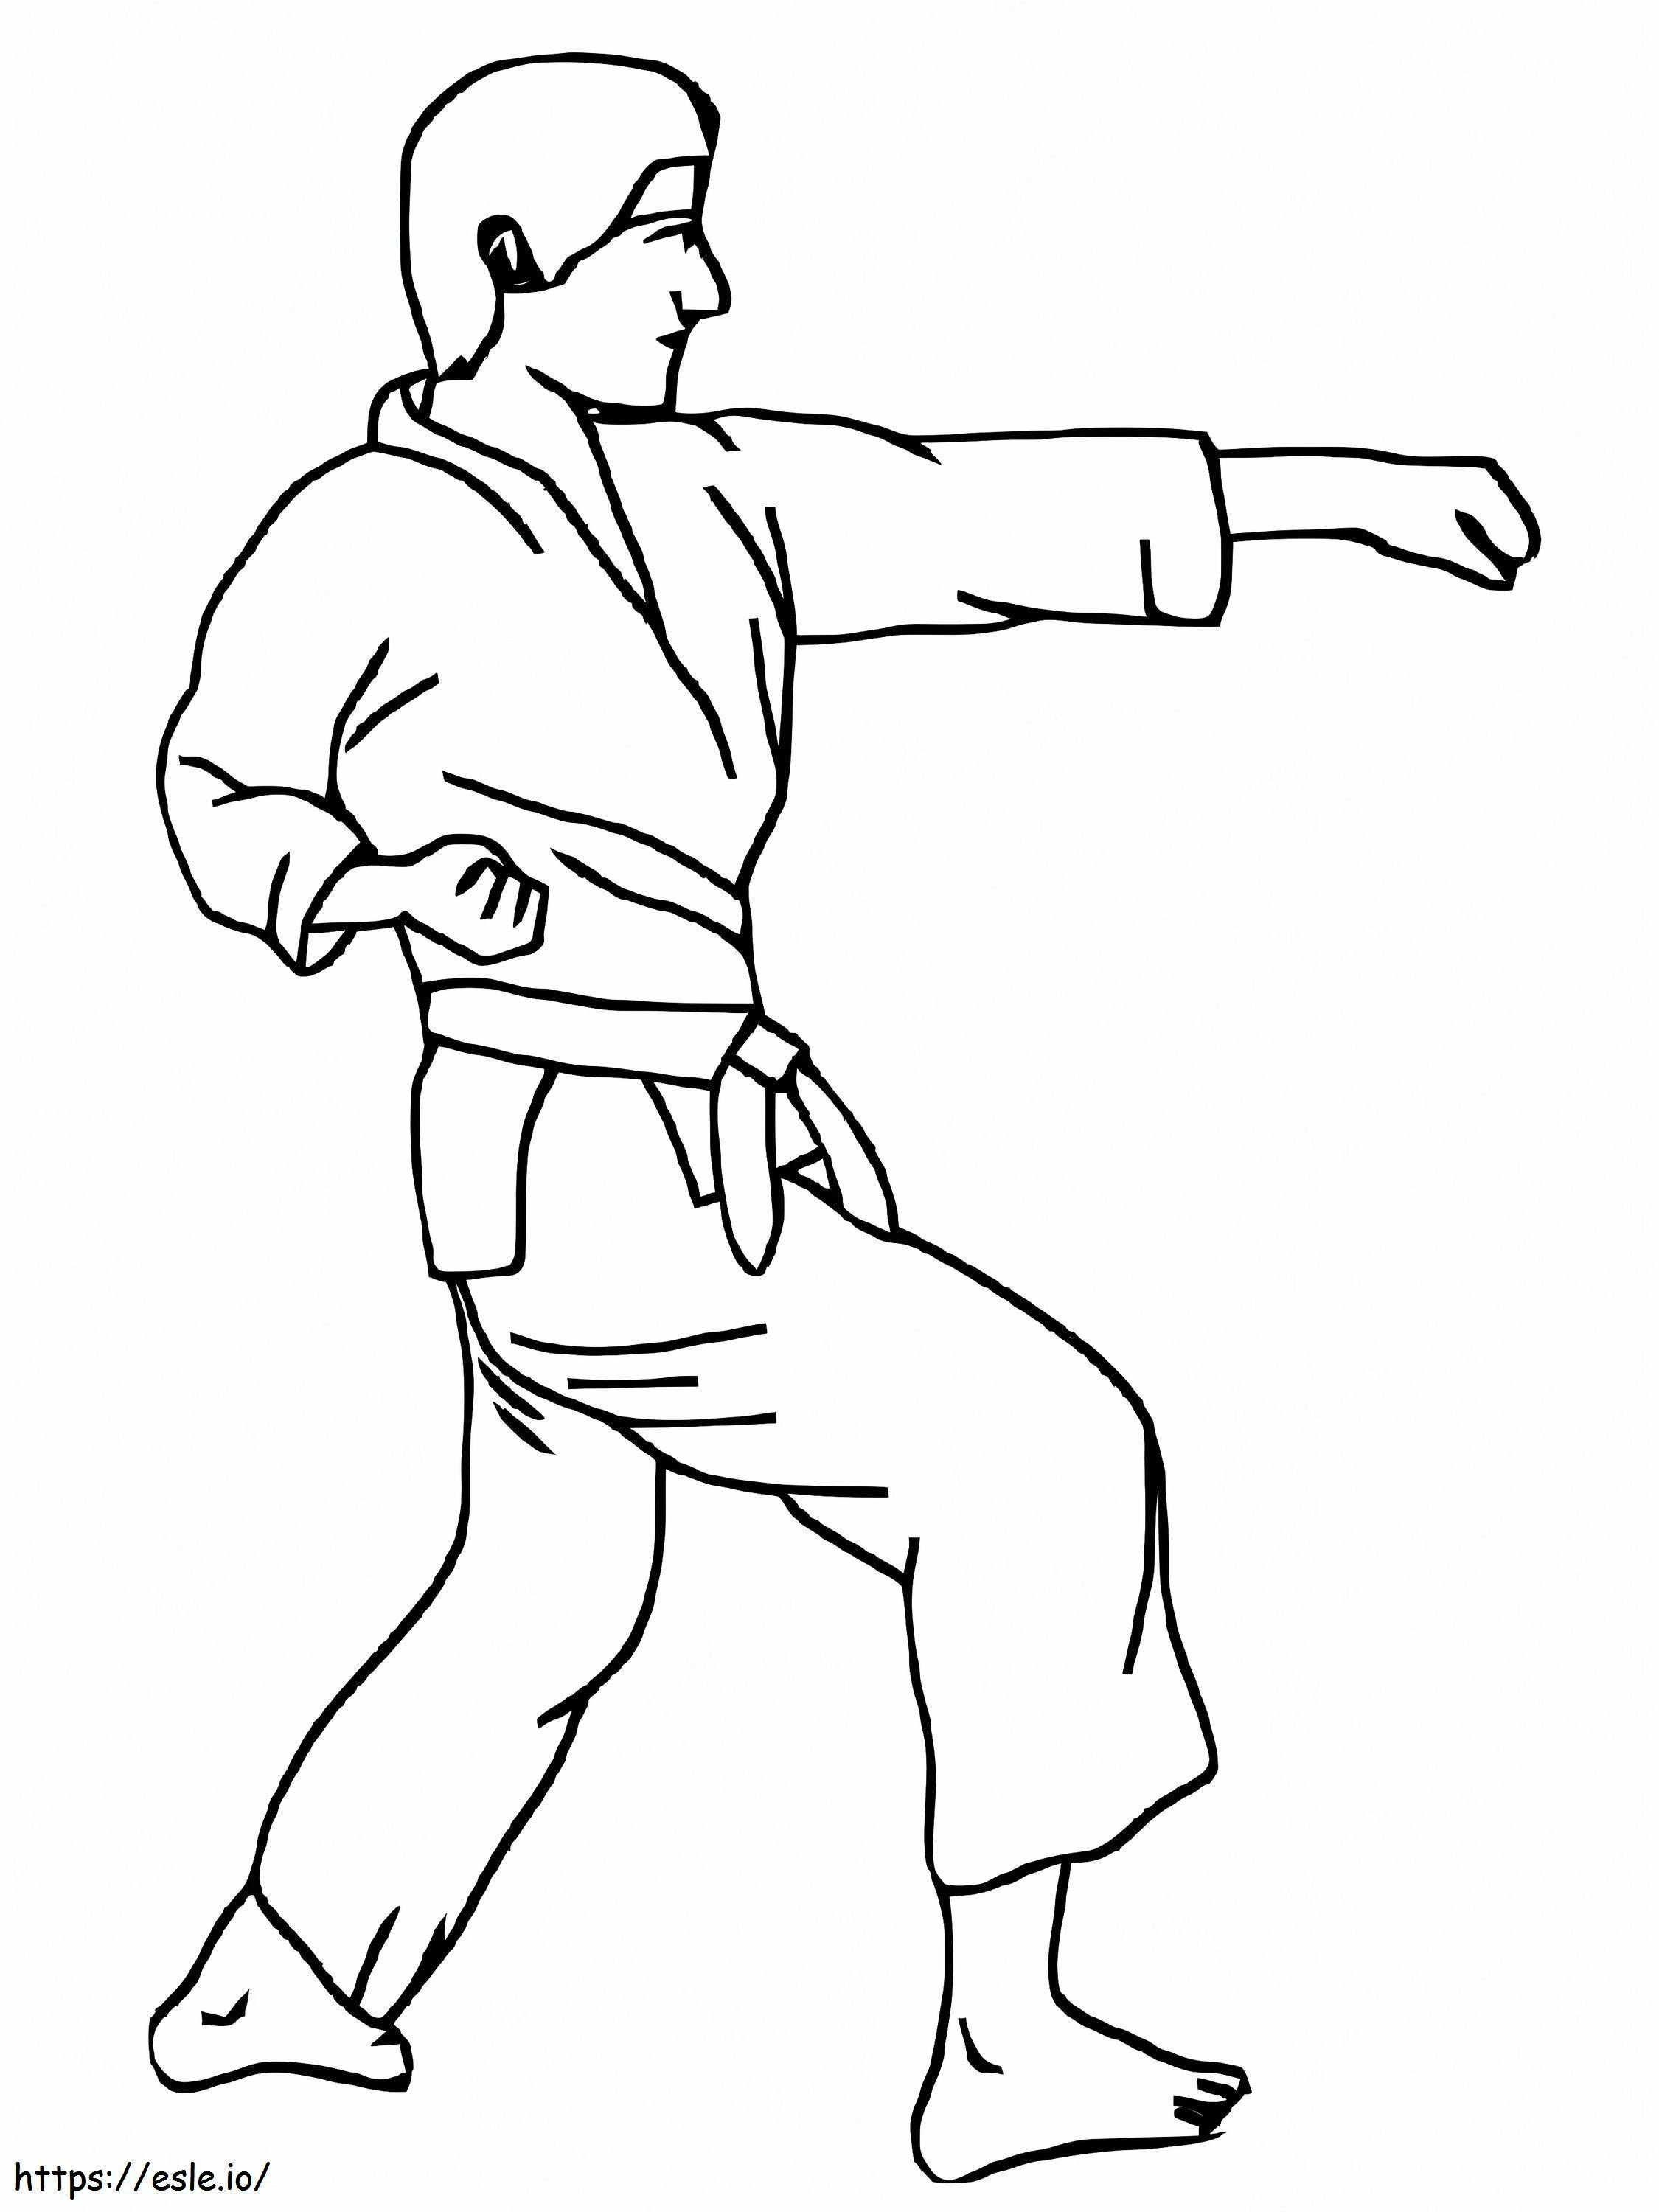 Free Karate coloring page